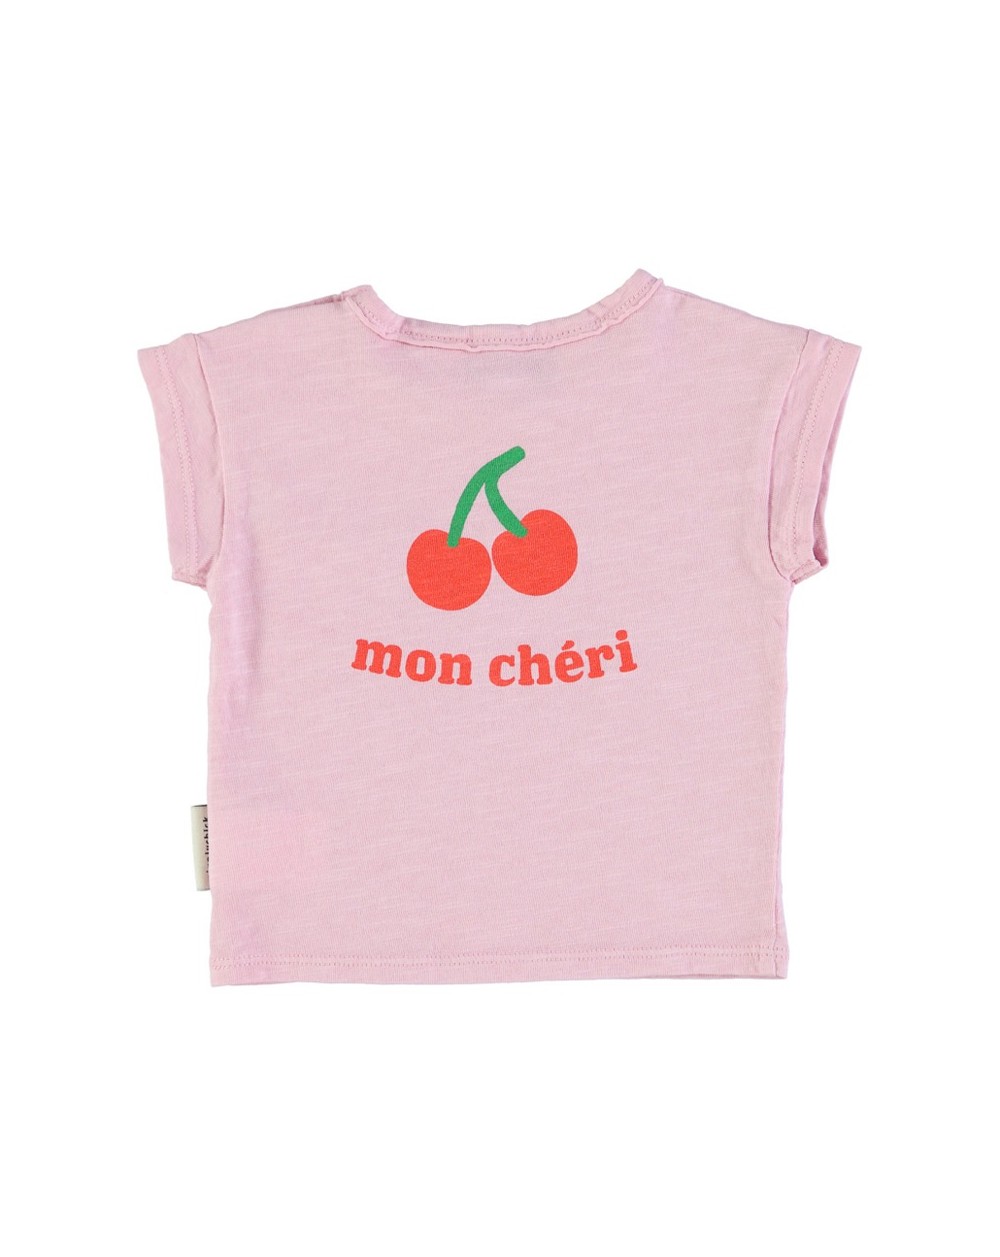 Piupuichick - T-Shirt - Cherry - je t'aime